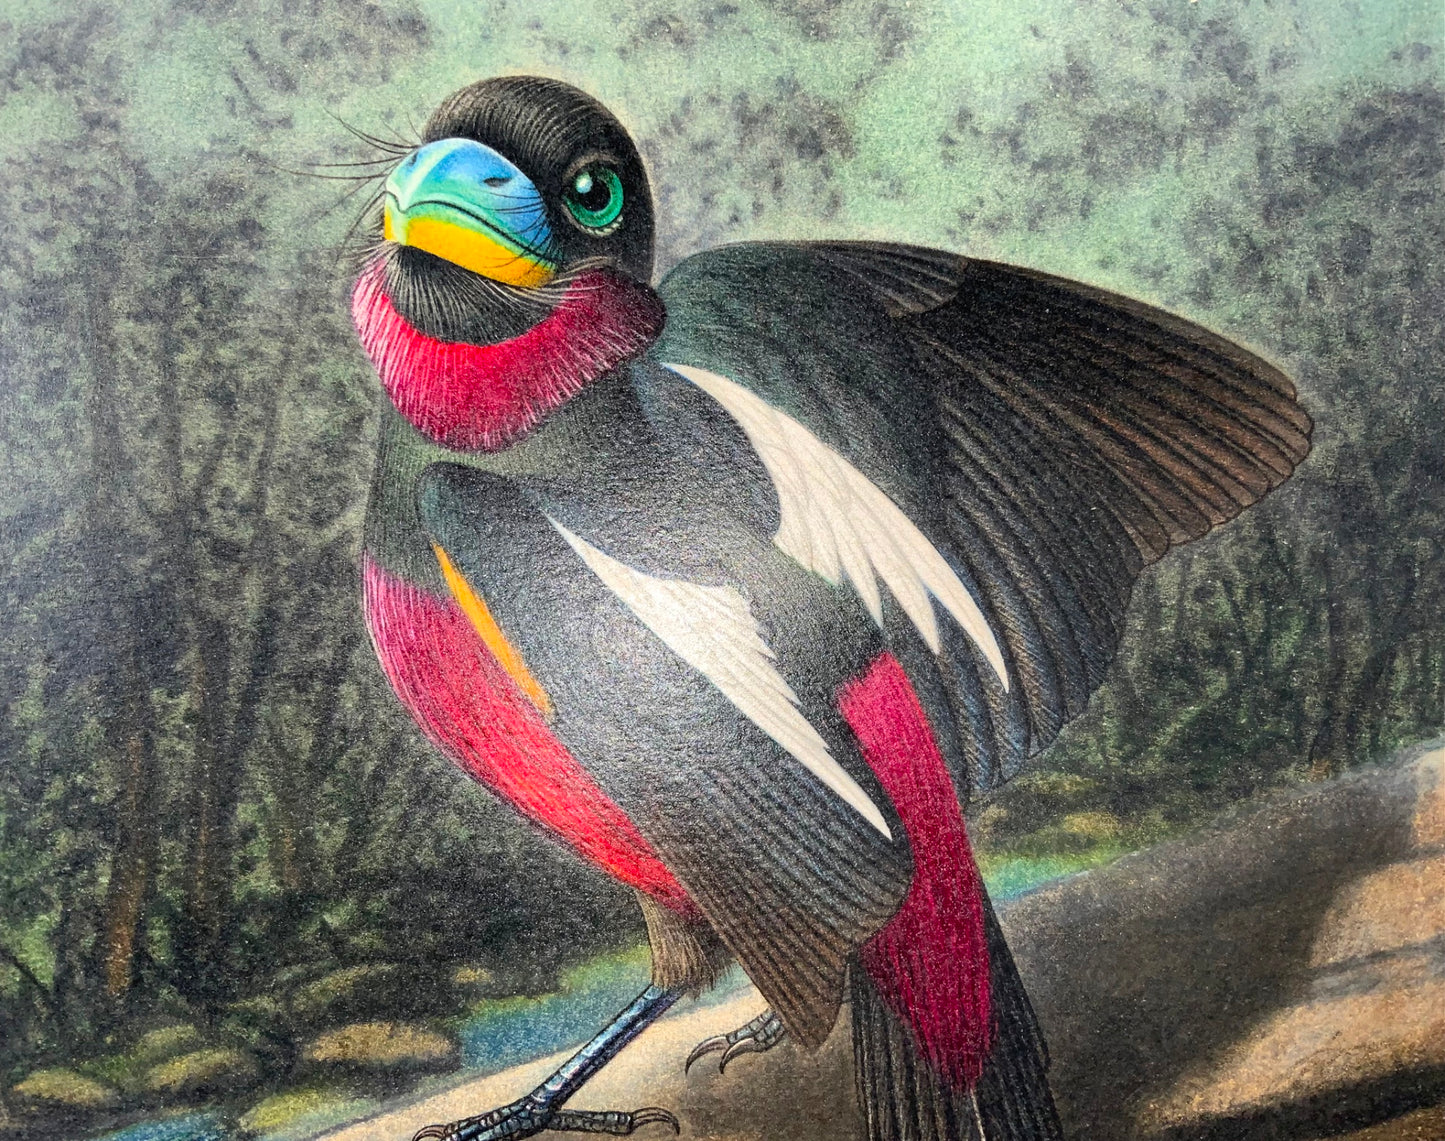 1952 Broadbill, ornithology, Walter Linsenmaier, coloured pencil drawing